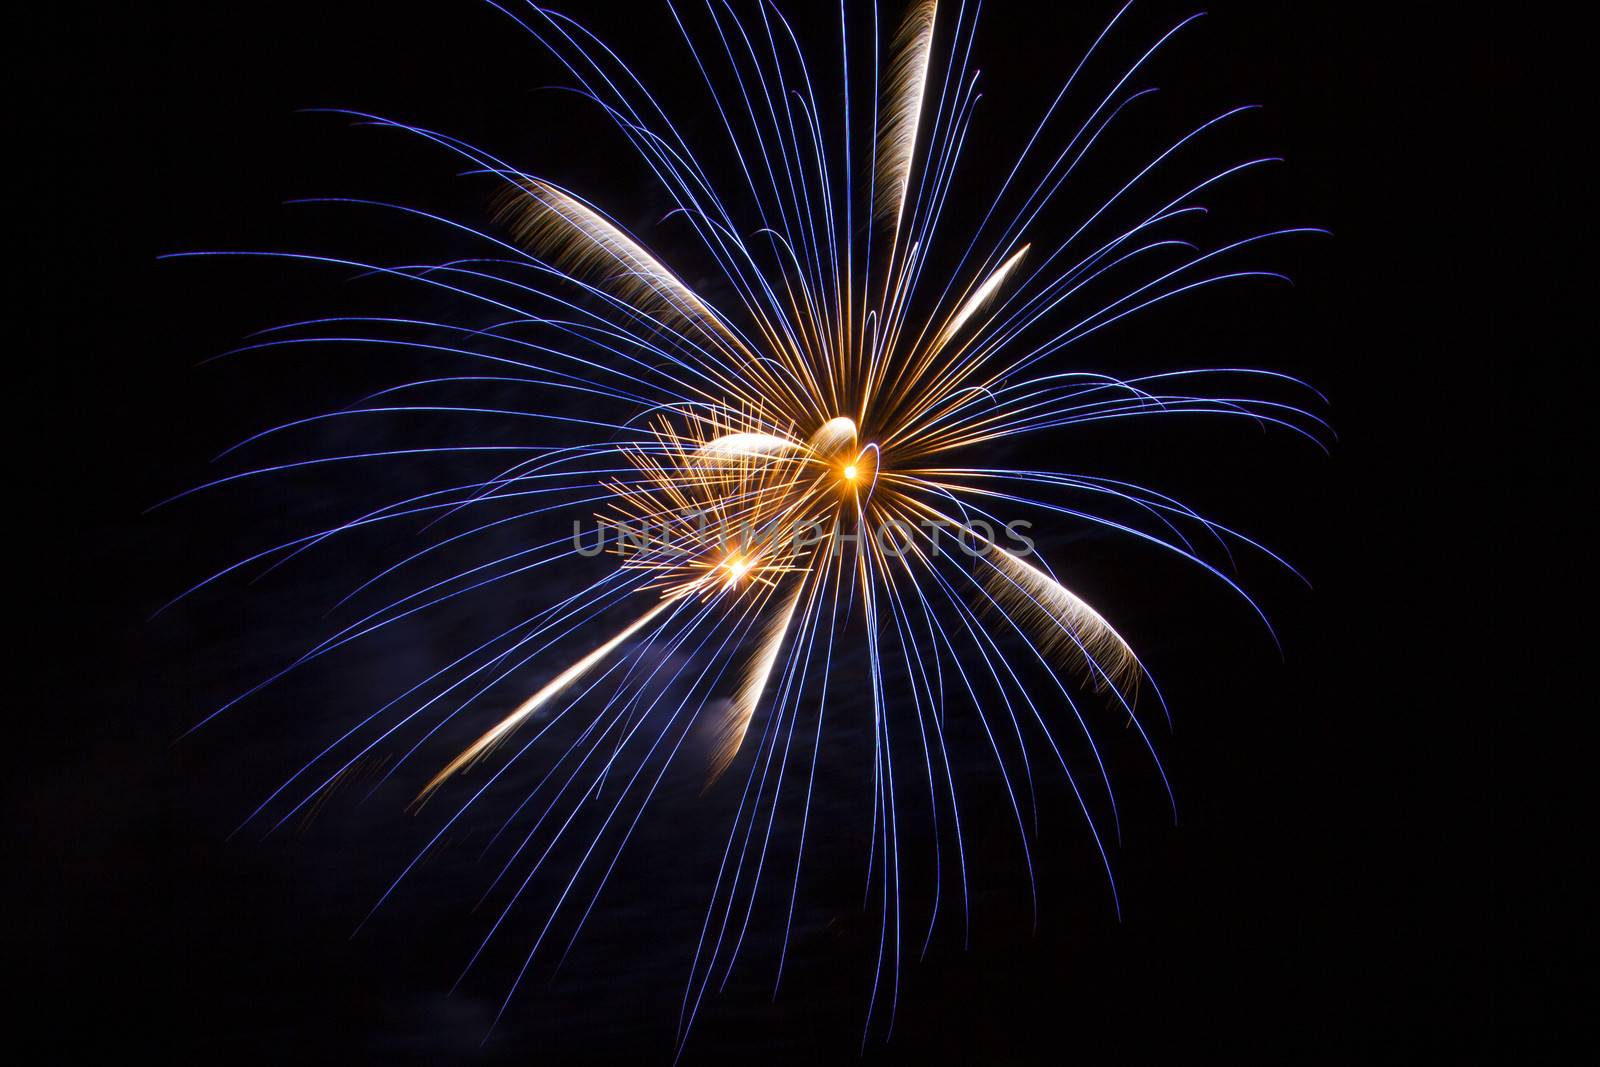 Fireworks by Cursedsenses